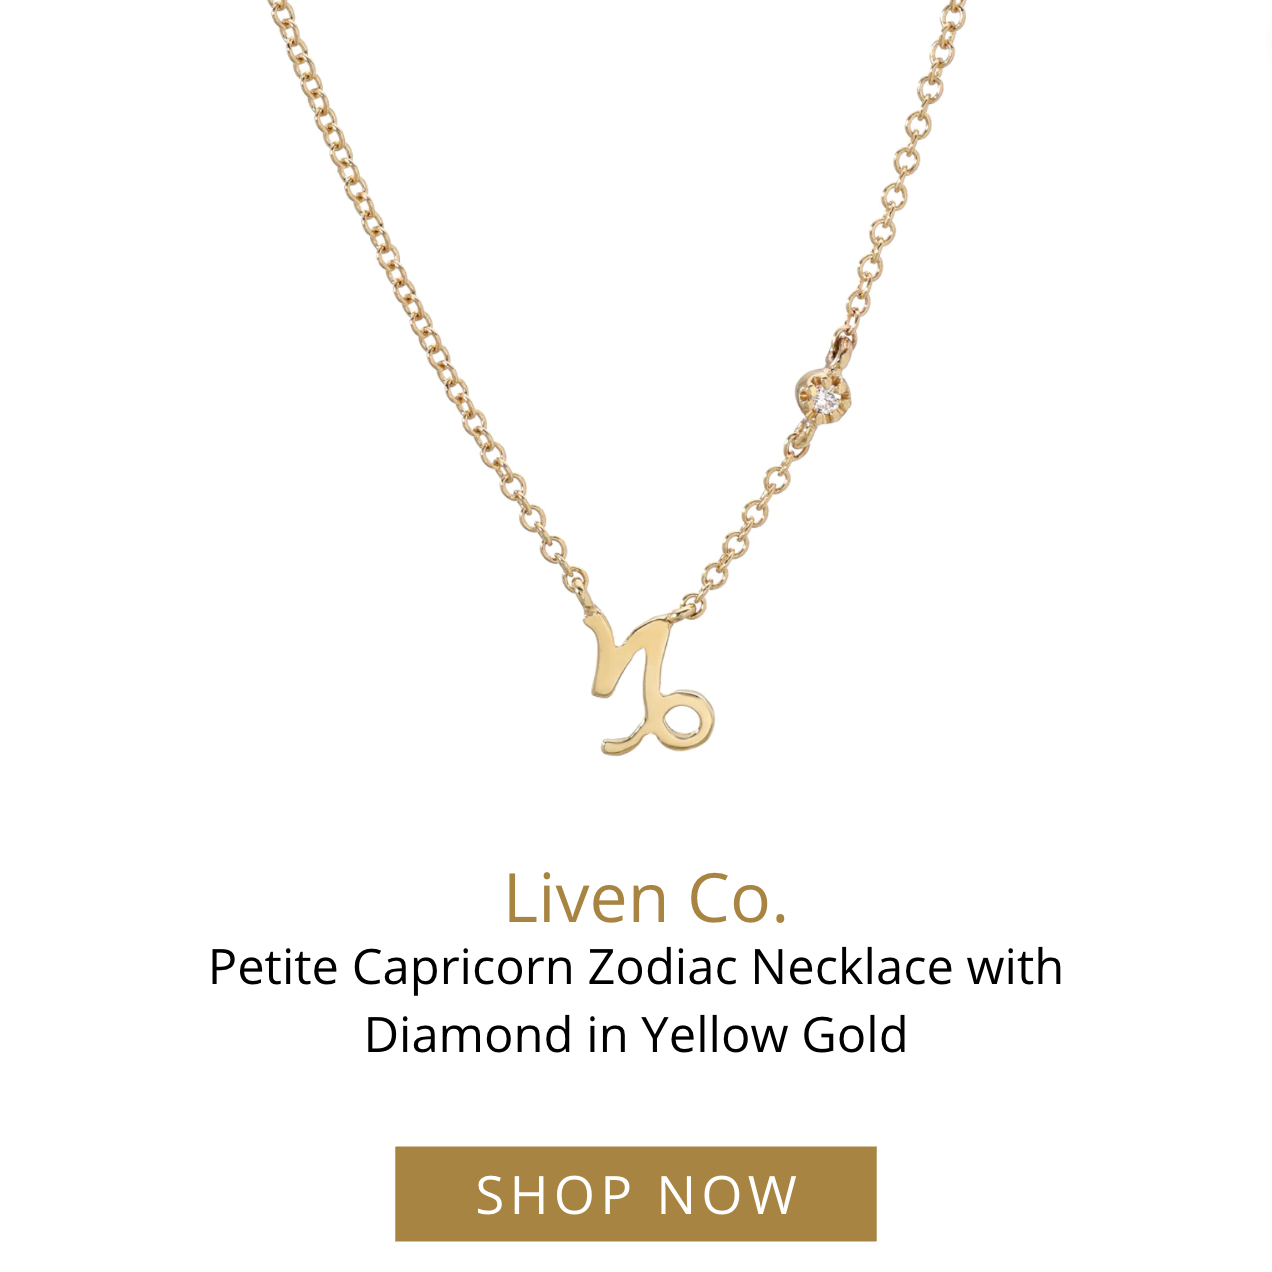 Petite Capricorn Zodiac Necklace with Diamond in Yellow Gold